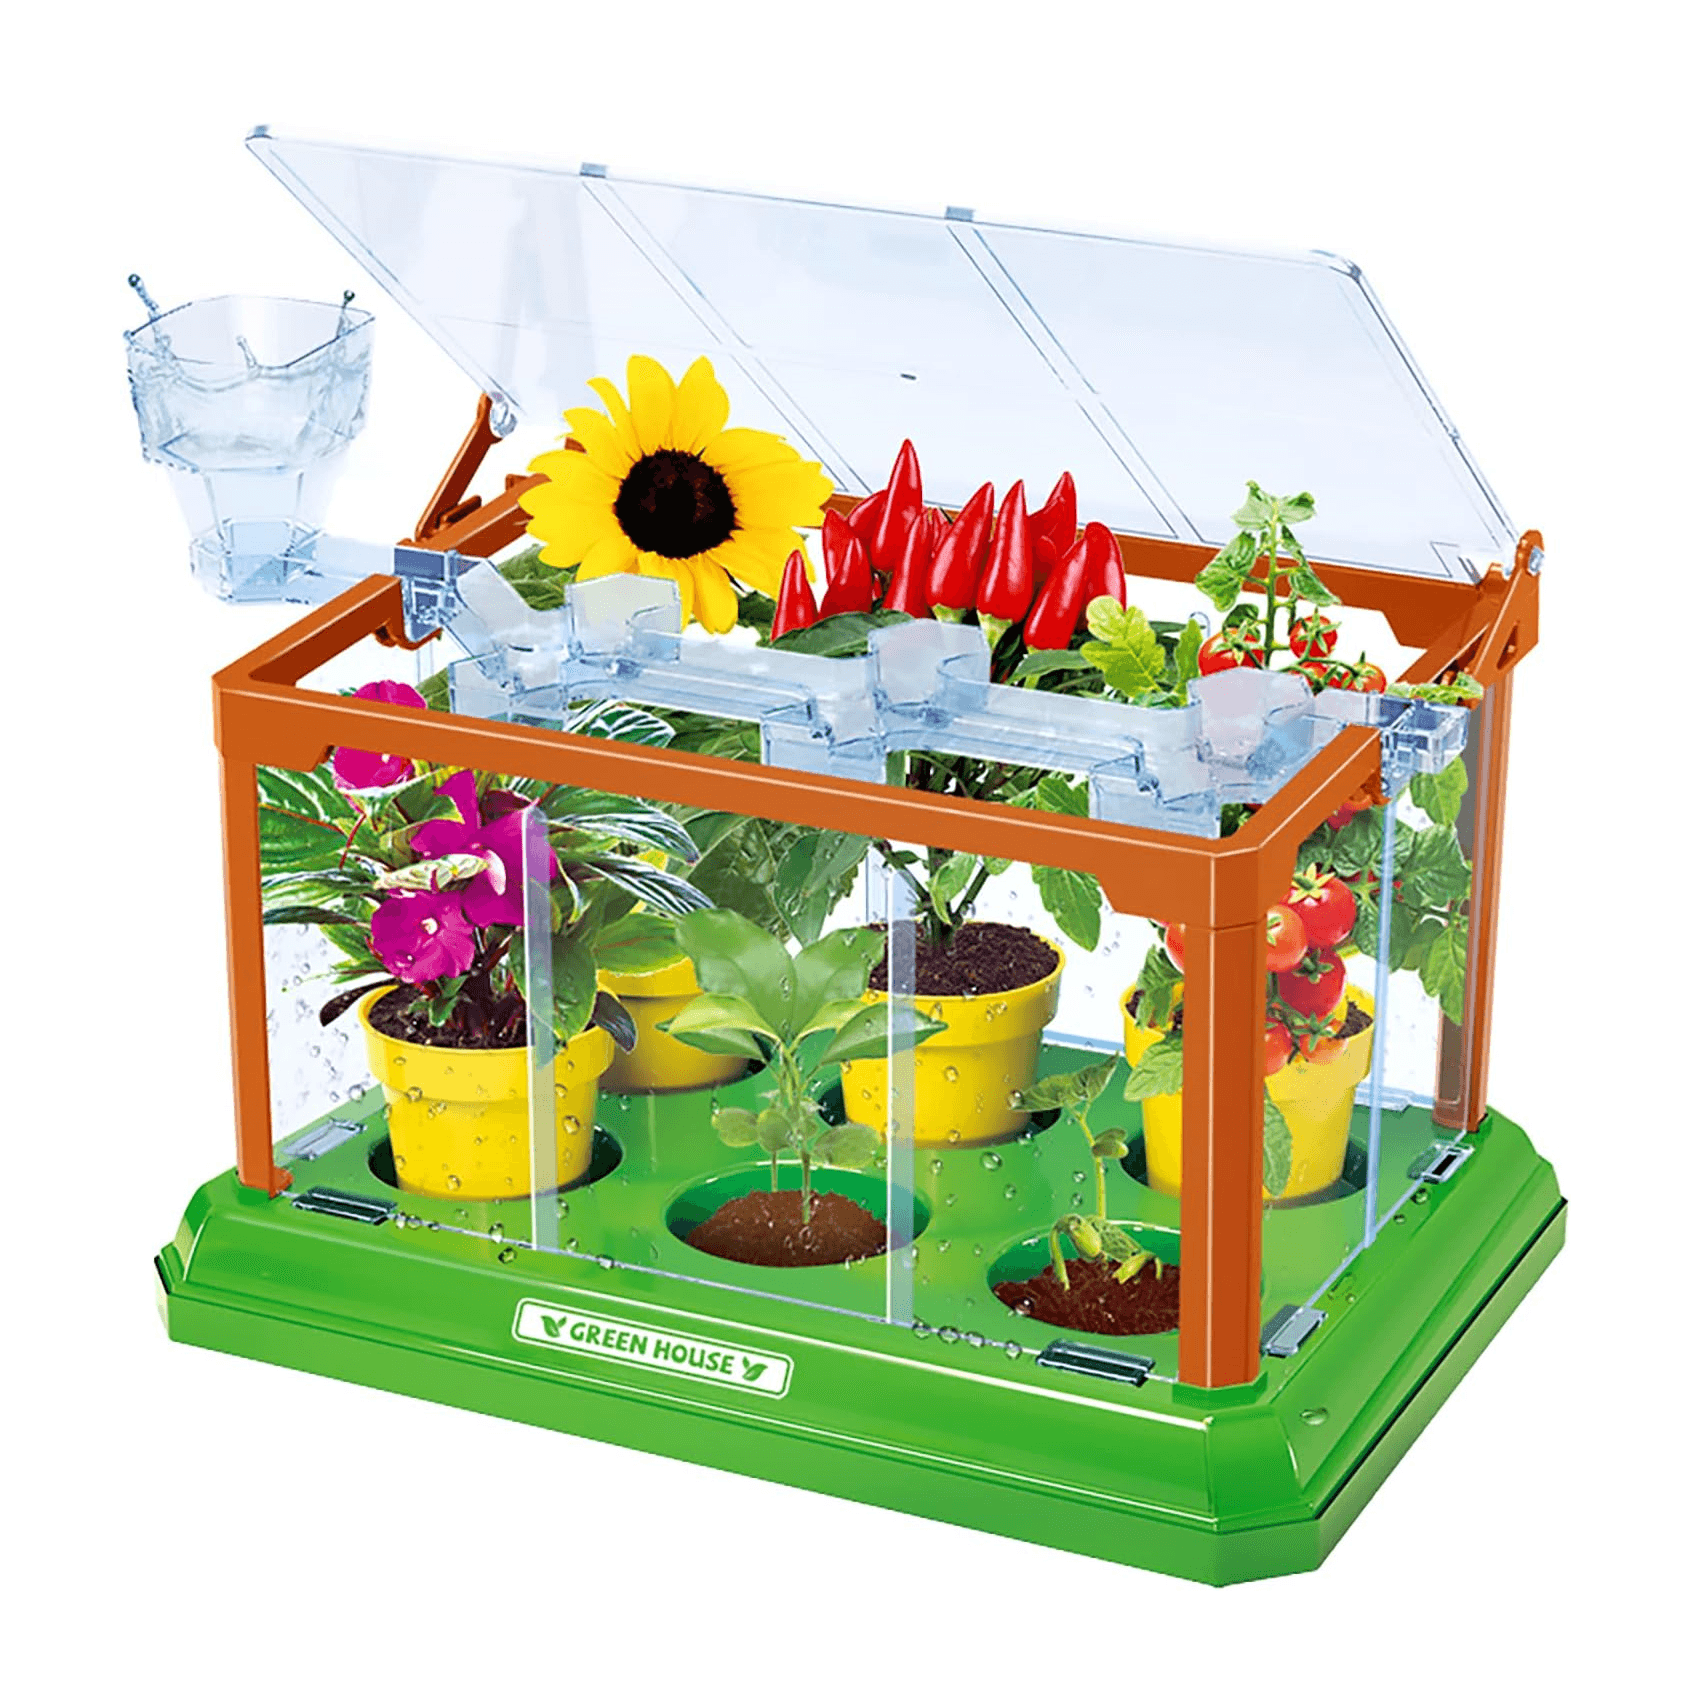 Montessori EXBEPE Greenhouse Growing Terrarium Kit